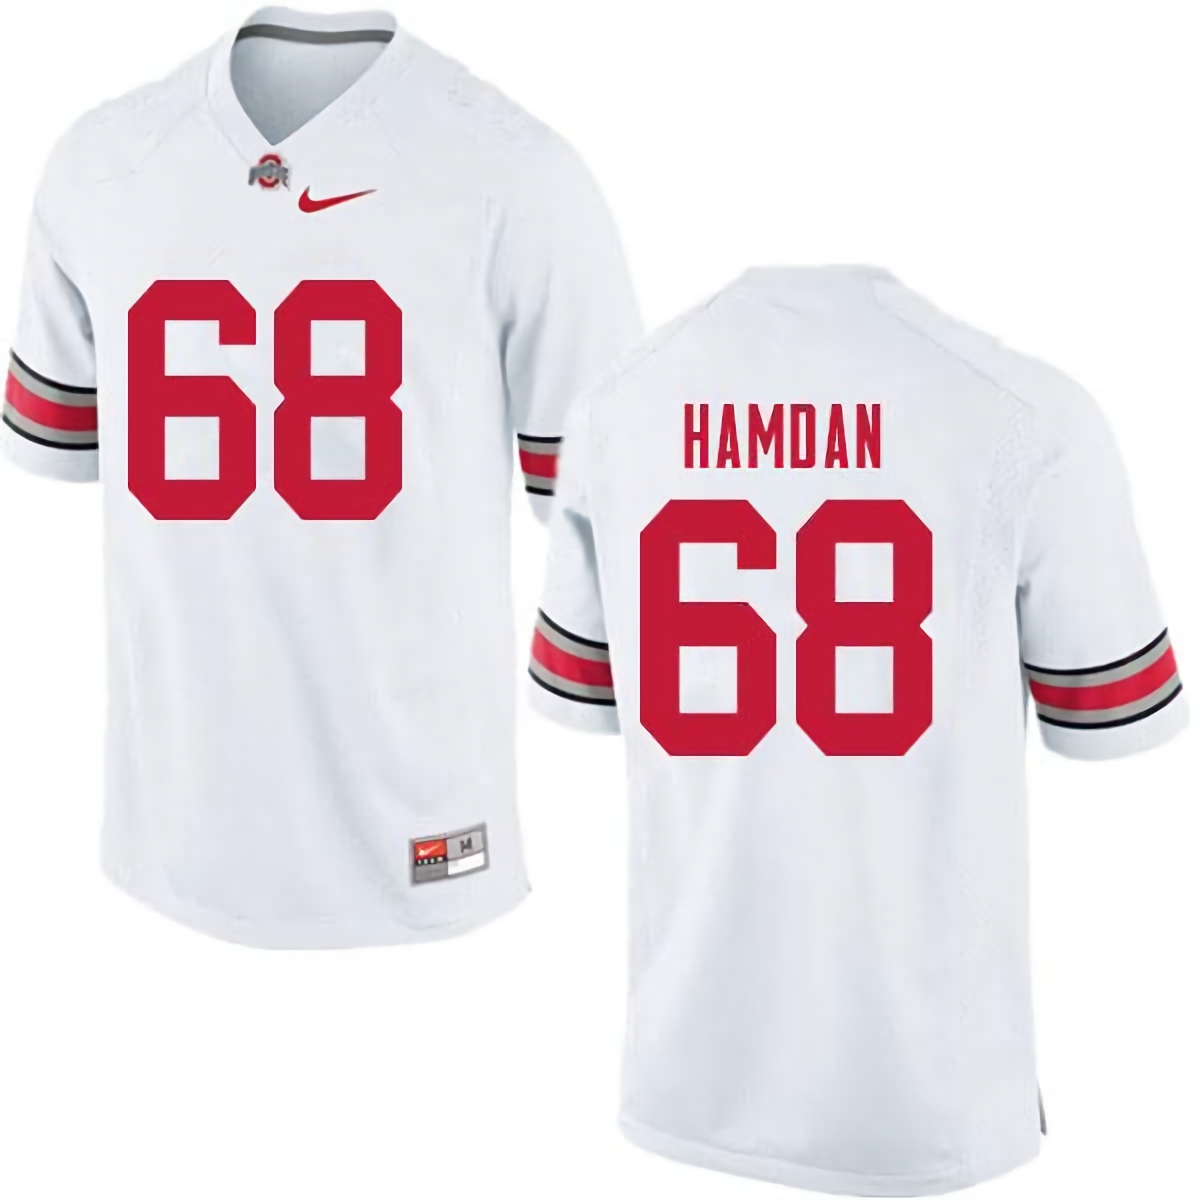 Zaid Hamdan Ohio State Buckeyes Men's NCAA #68 Nike White College Stitched Football Jersey XSH0856CO